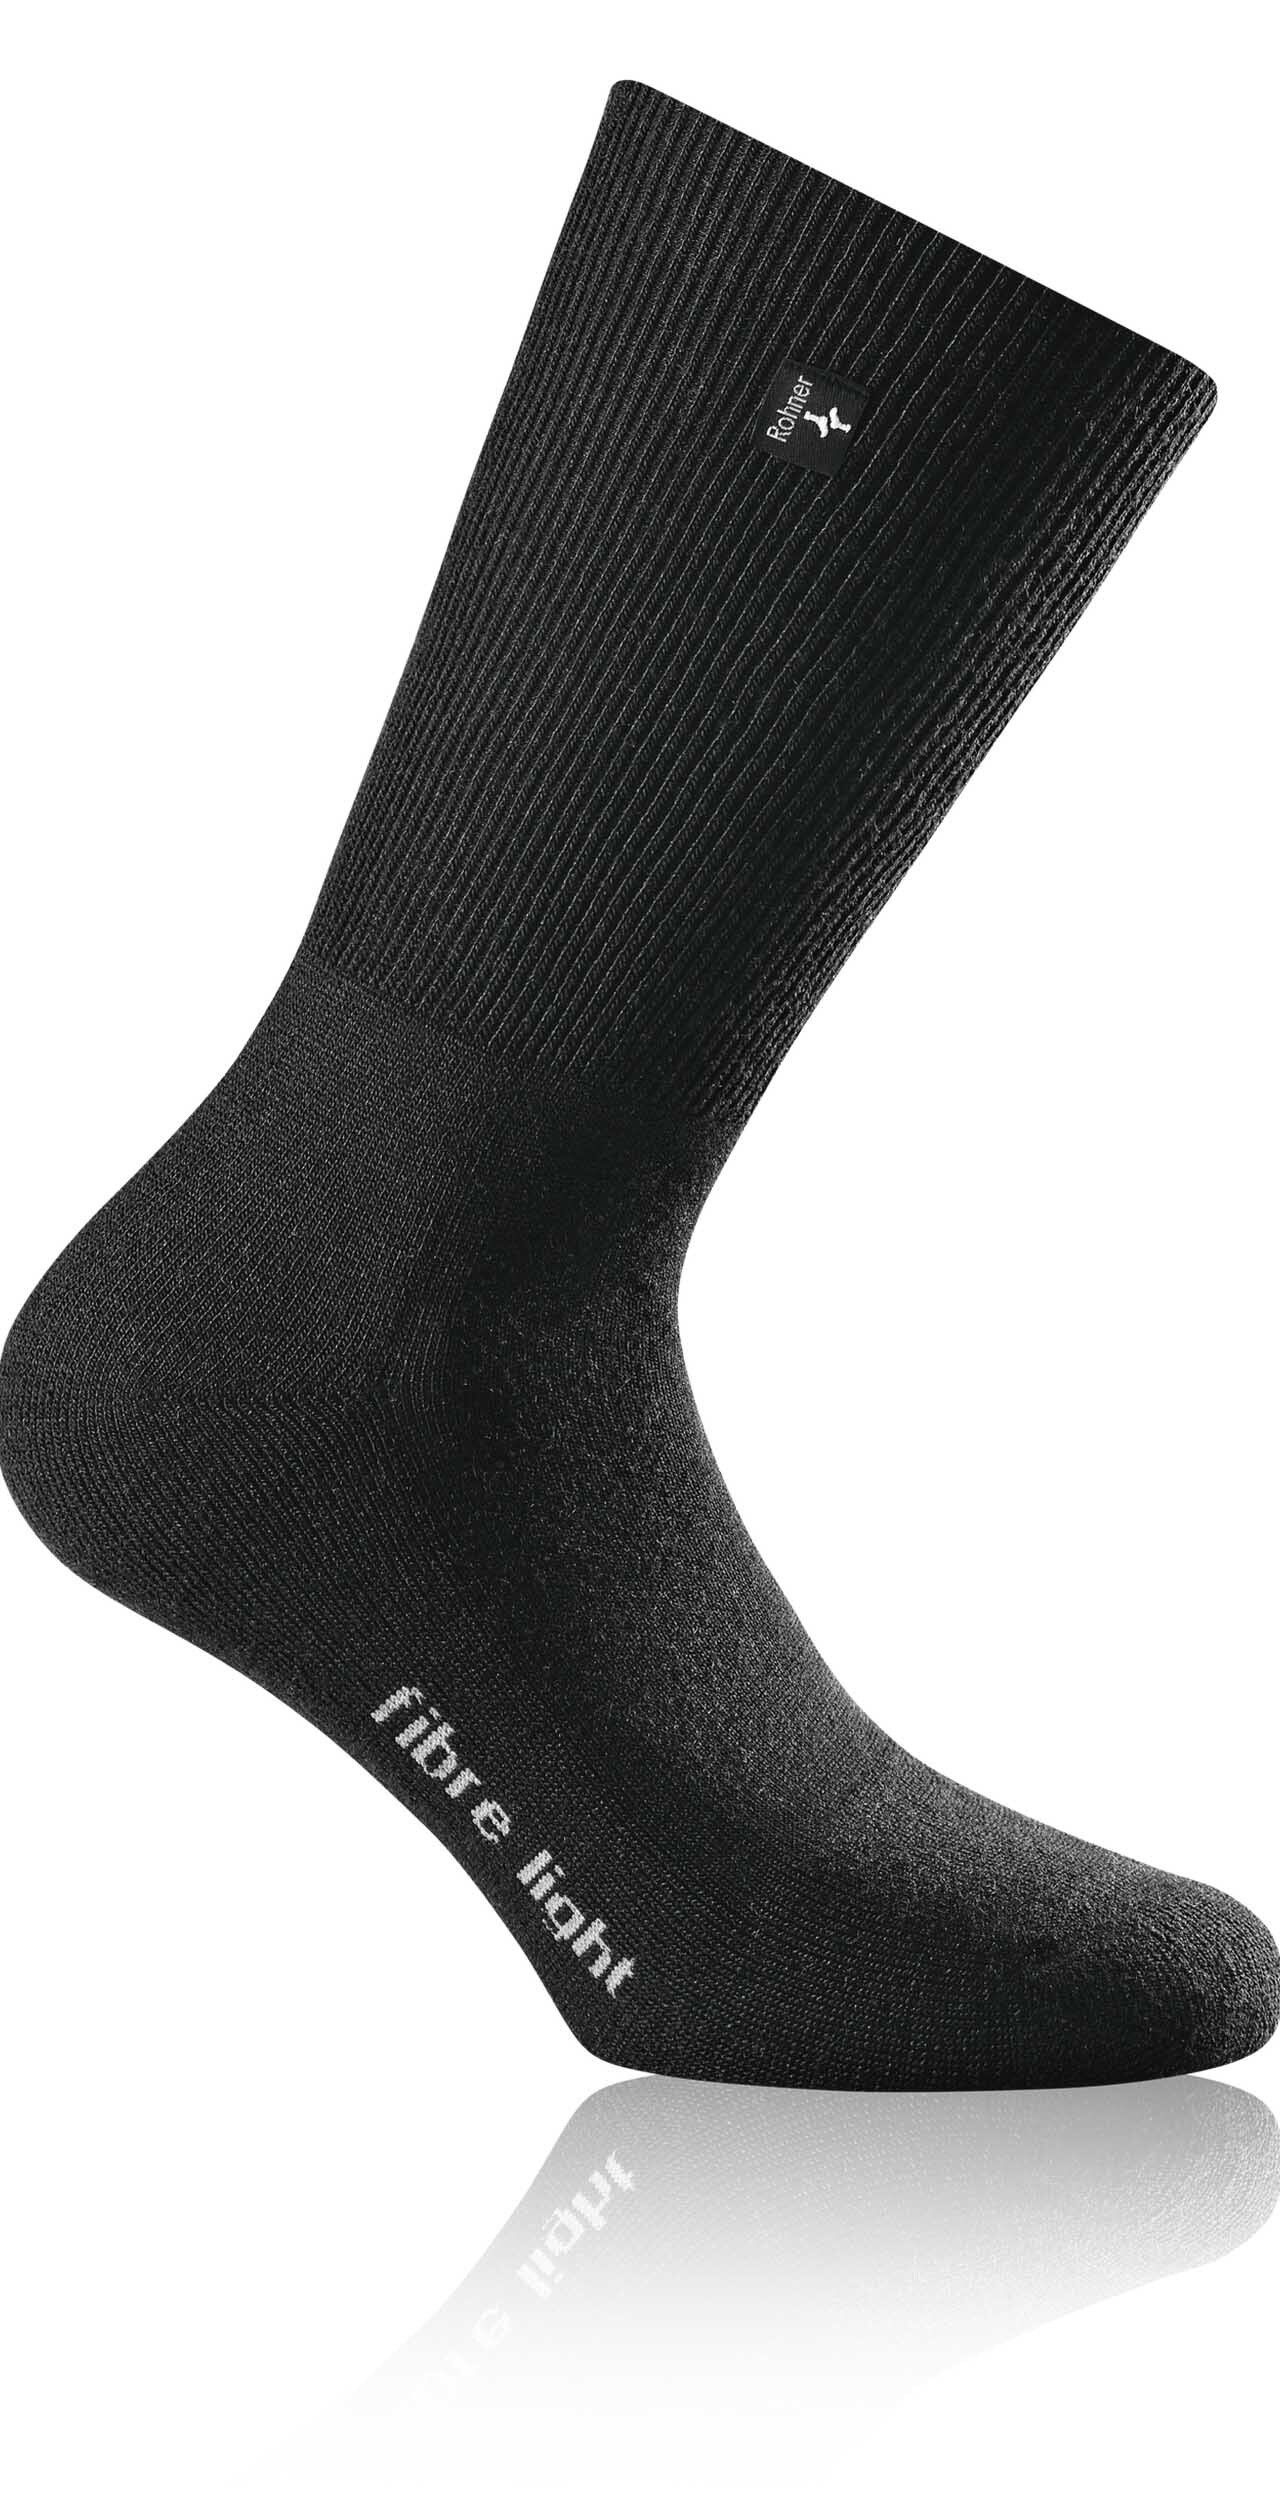 Rohner Socks Sportsocken Unisex Trekking fibre supeR Schwarz light - Socken